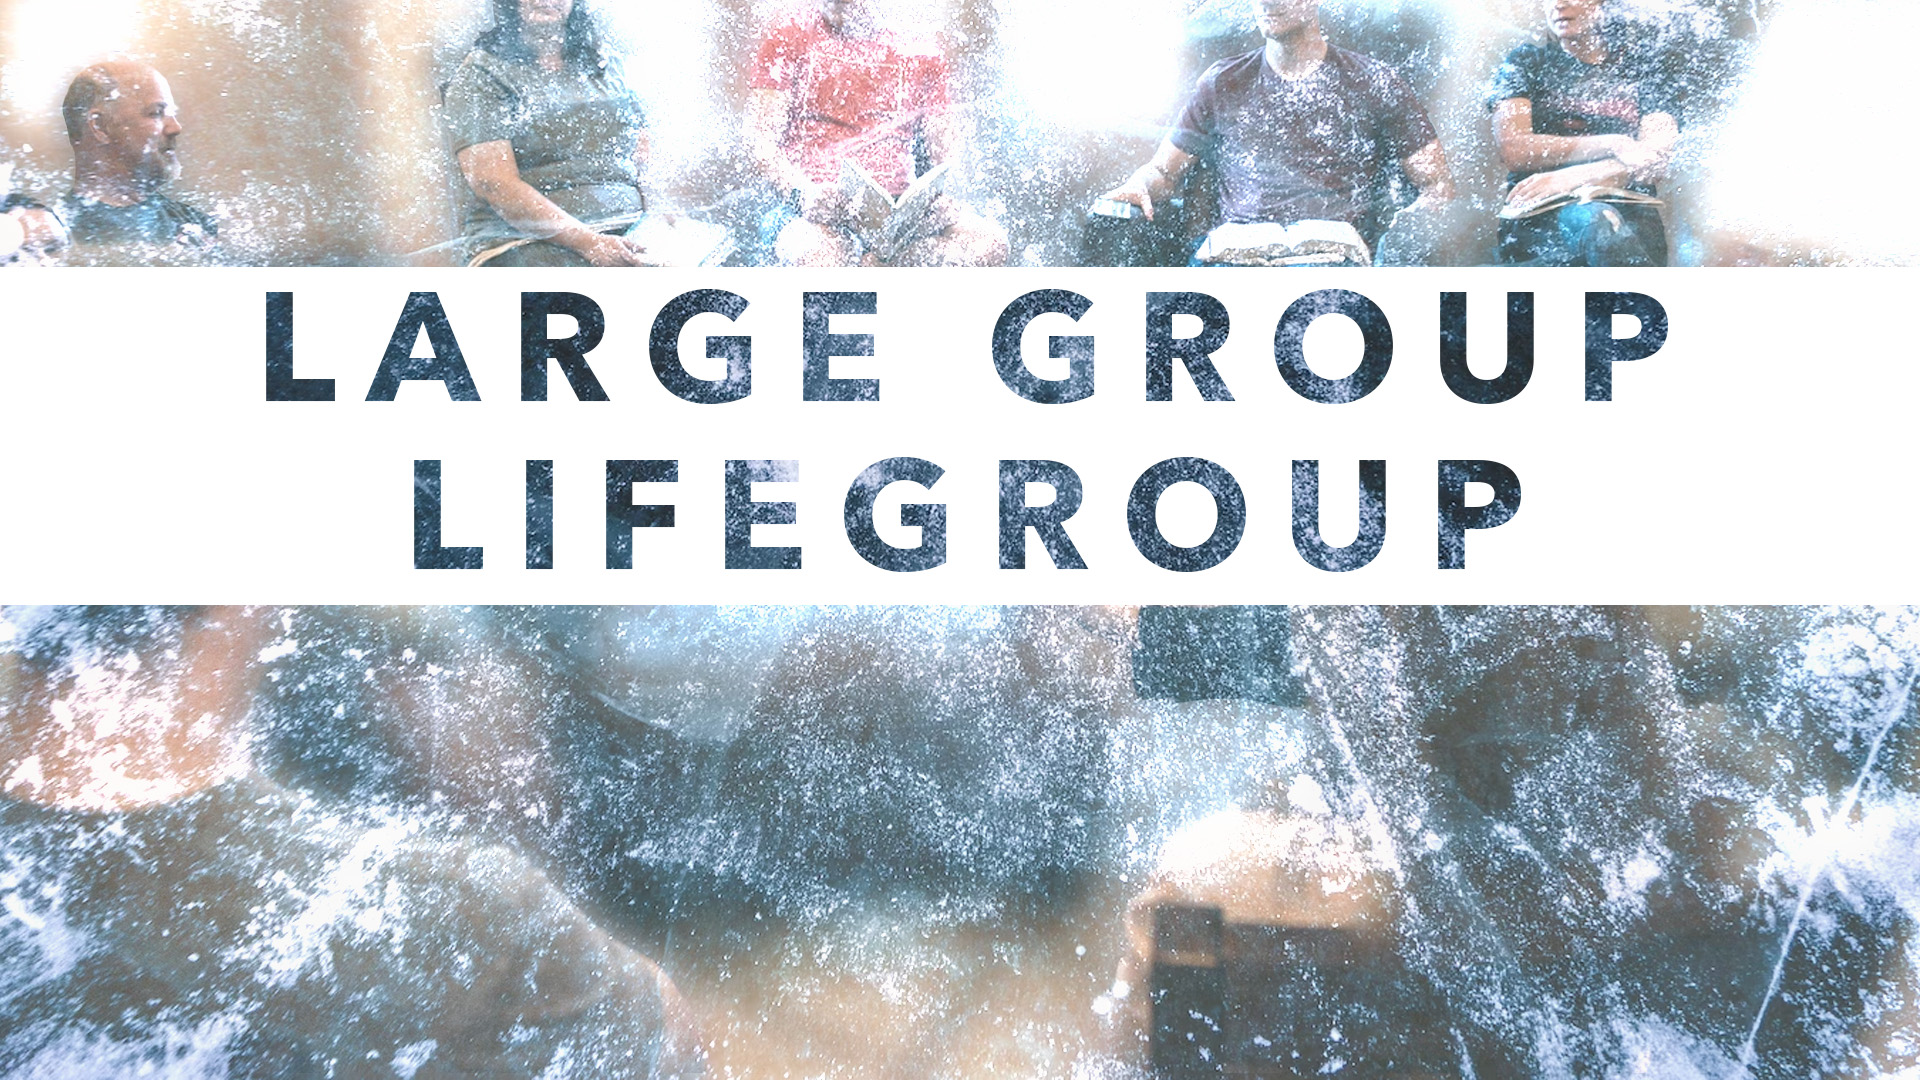 Large Group Lifegroup